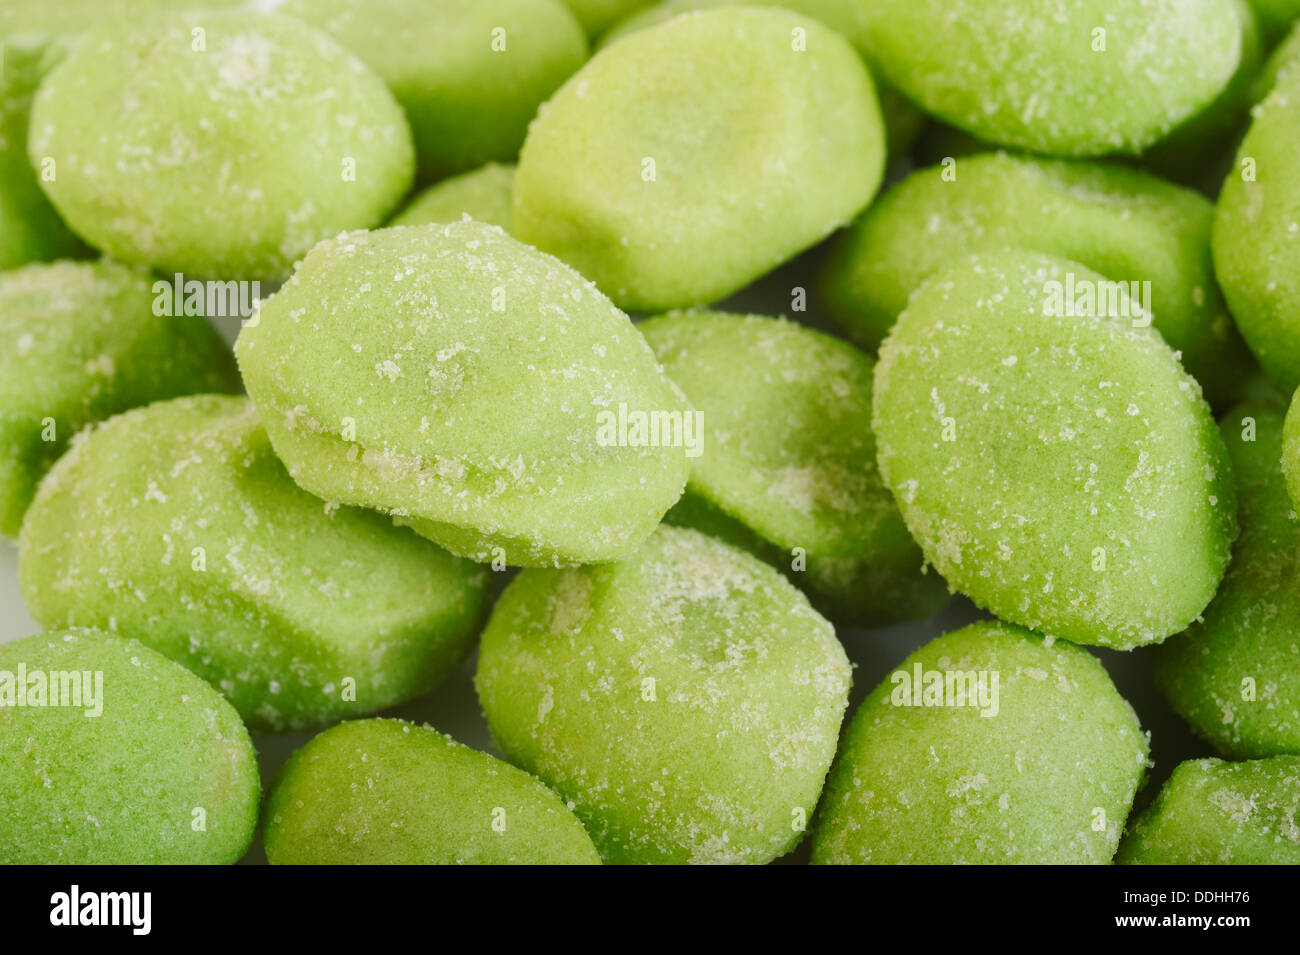 wasabi coated pistachios Stock Photo